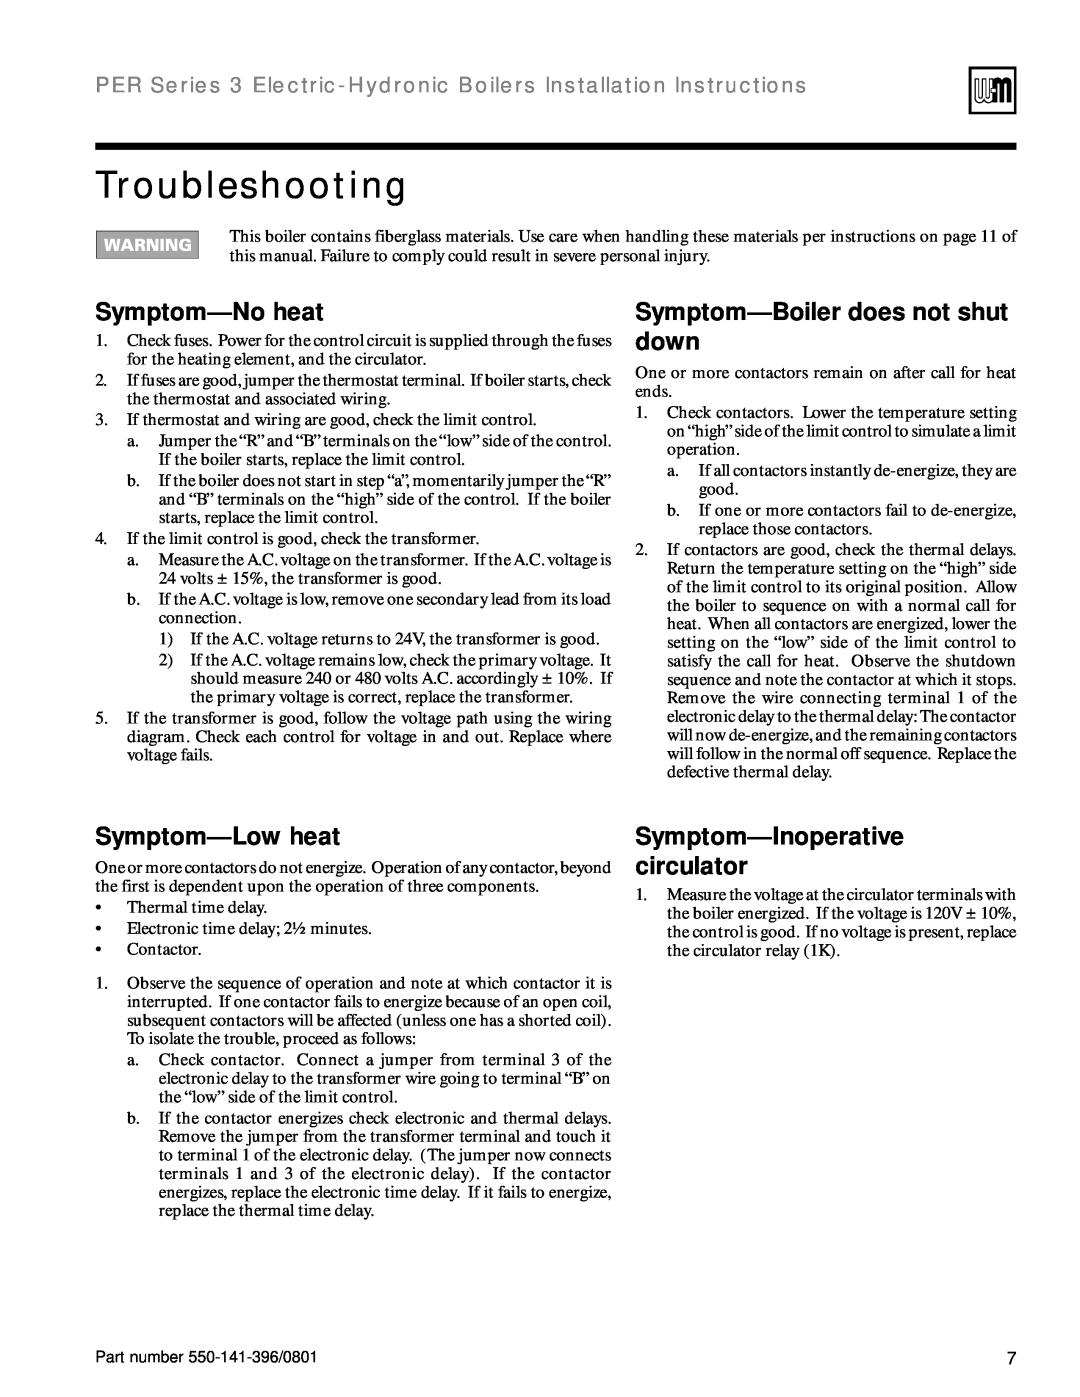 Weil-McLain 550-141-396/0801 Troubleshooting, Symptom-Noheat, Symptom-Boilerdoes not shut down, Symptom-Lowheat 